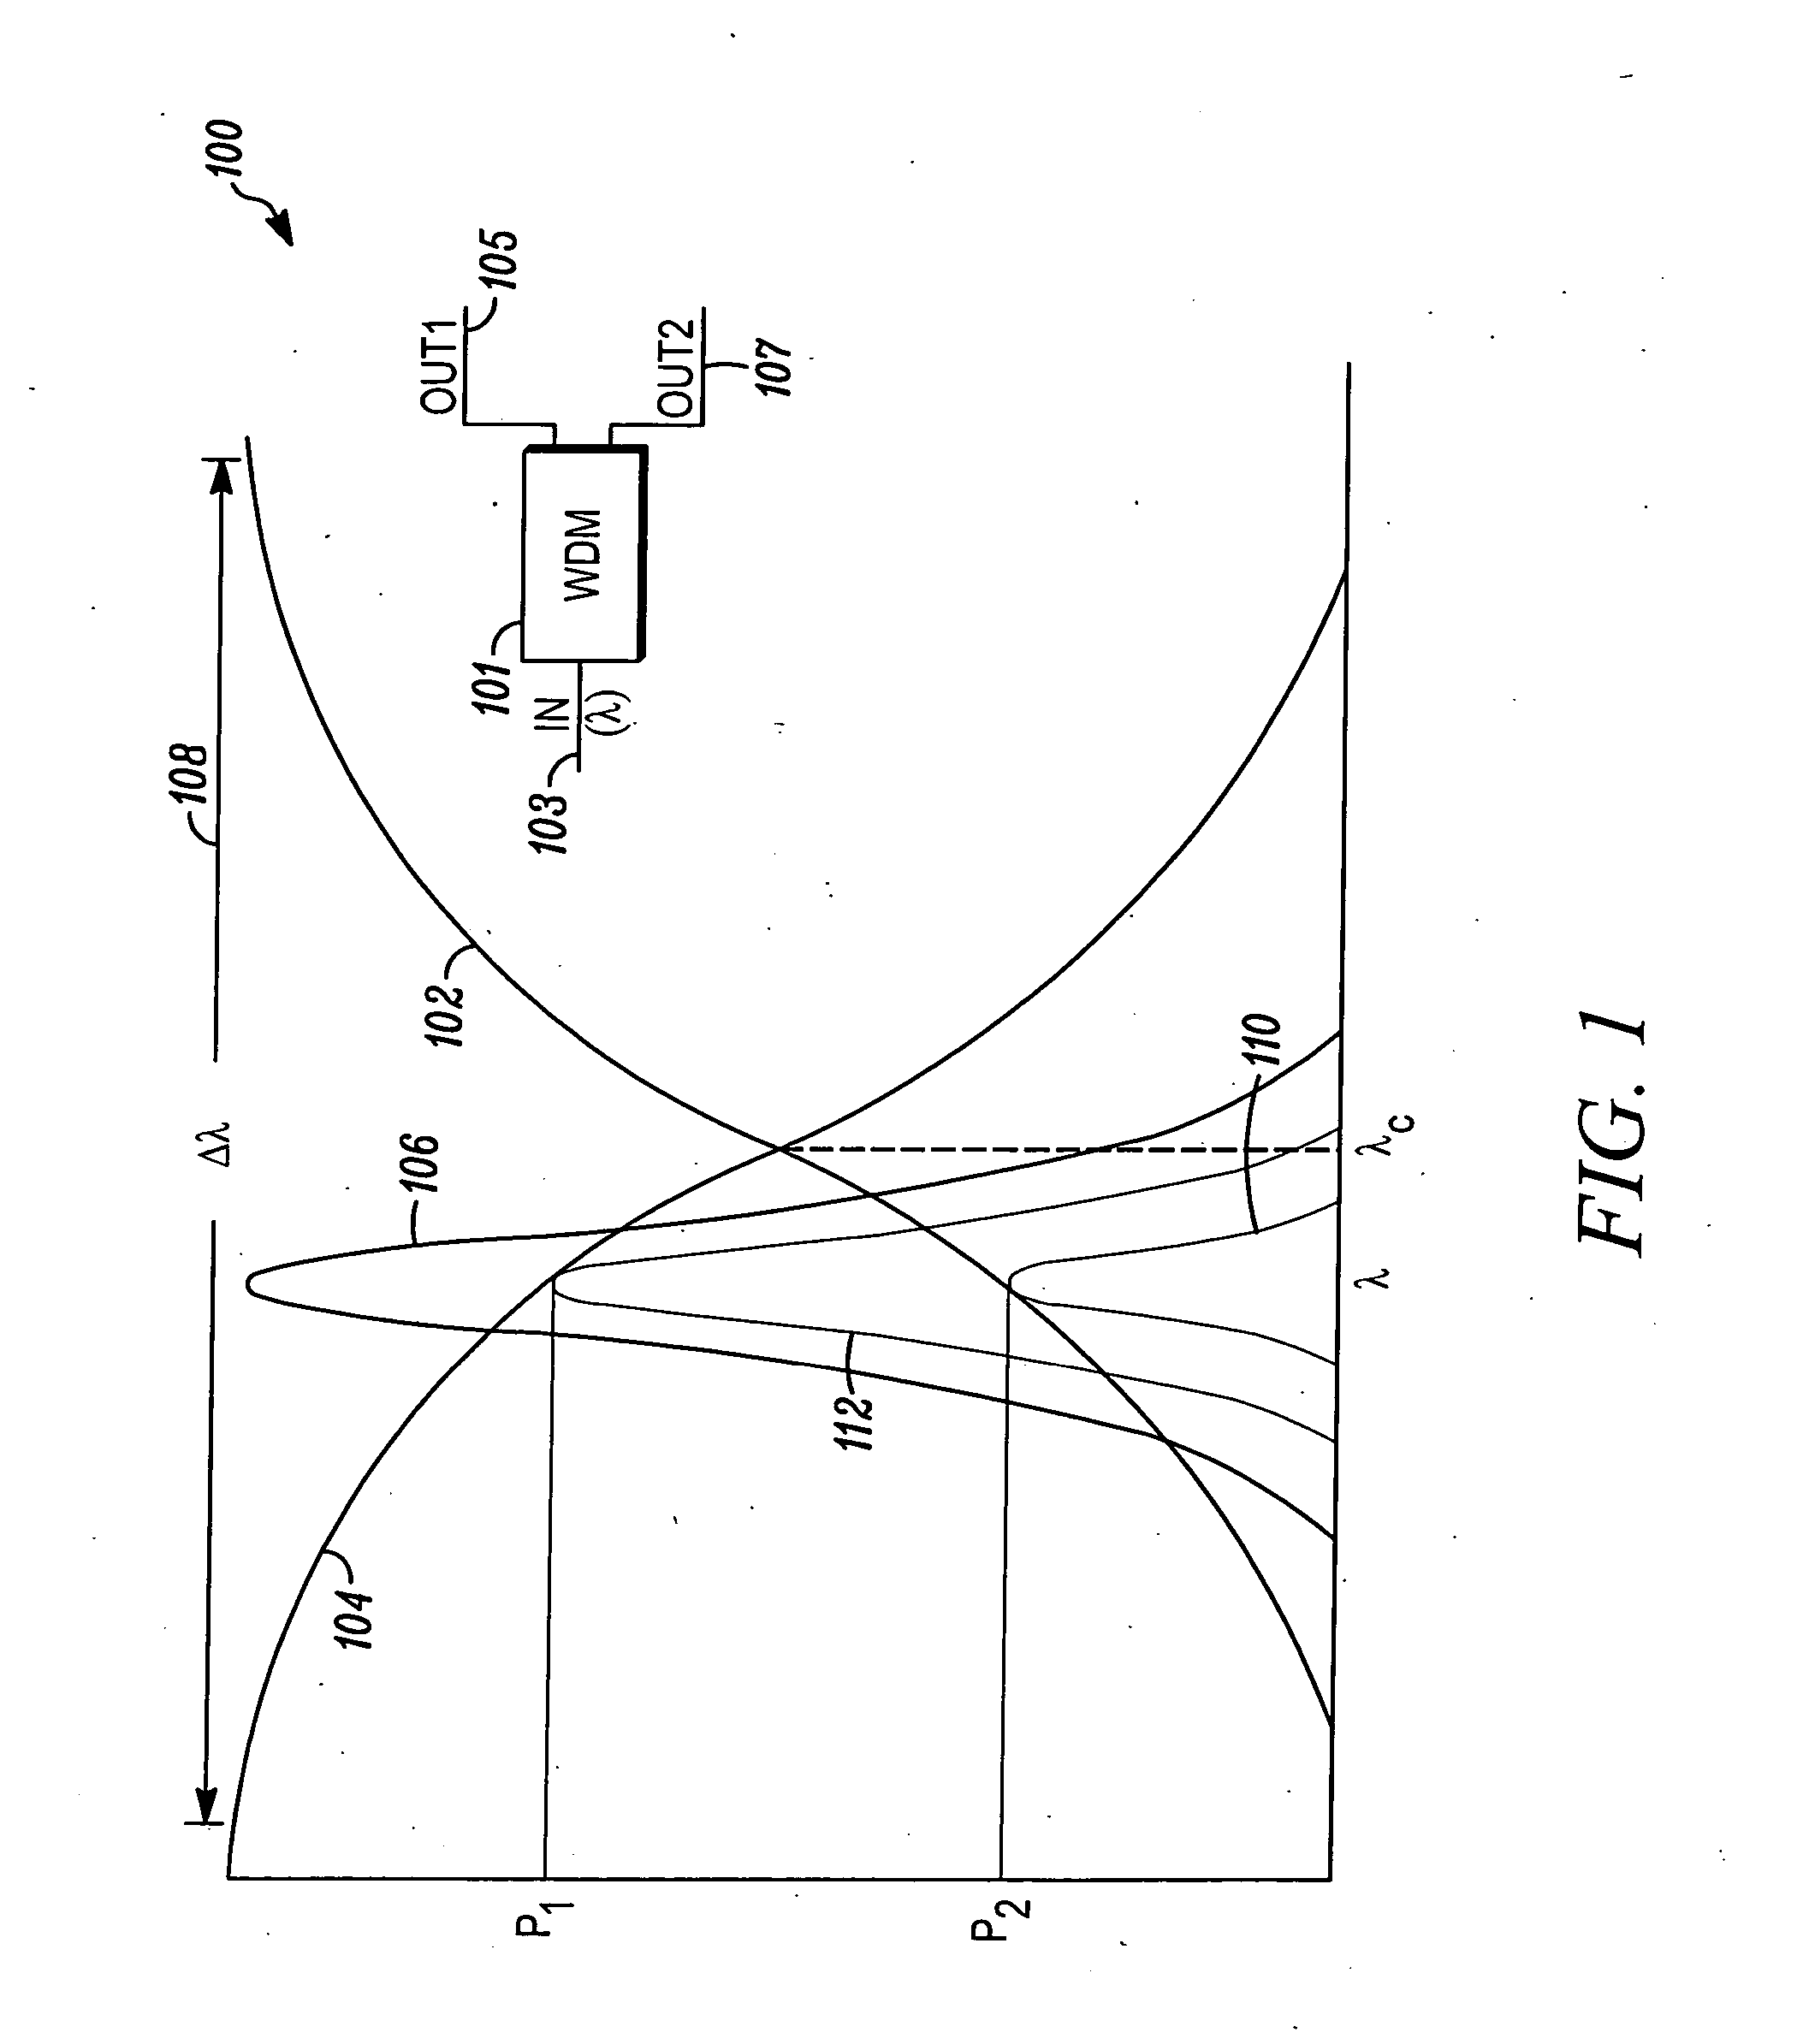 Wavelength calibration in a fiber optic gyroscope